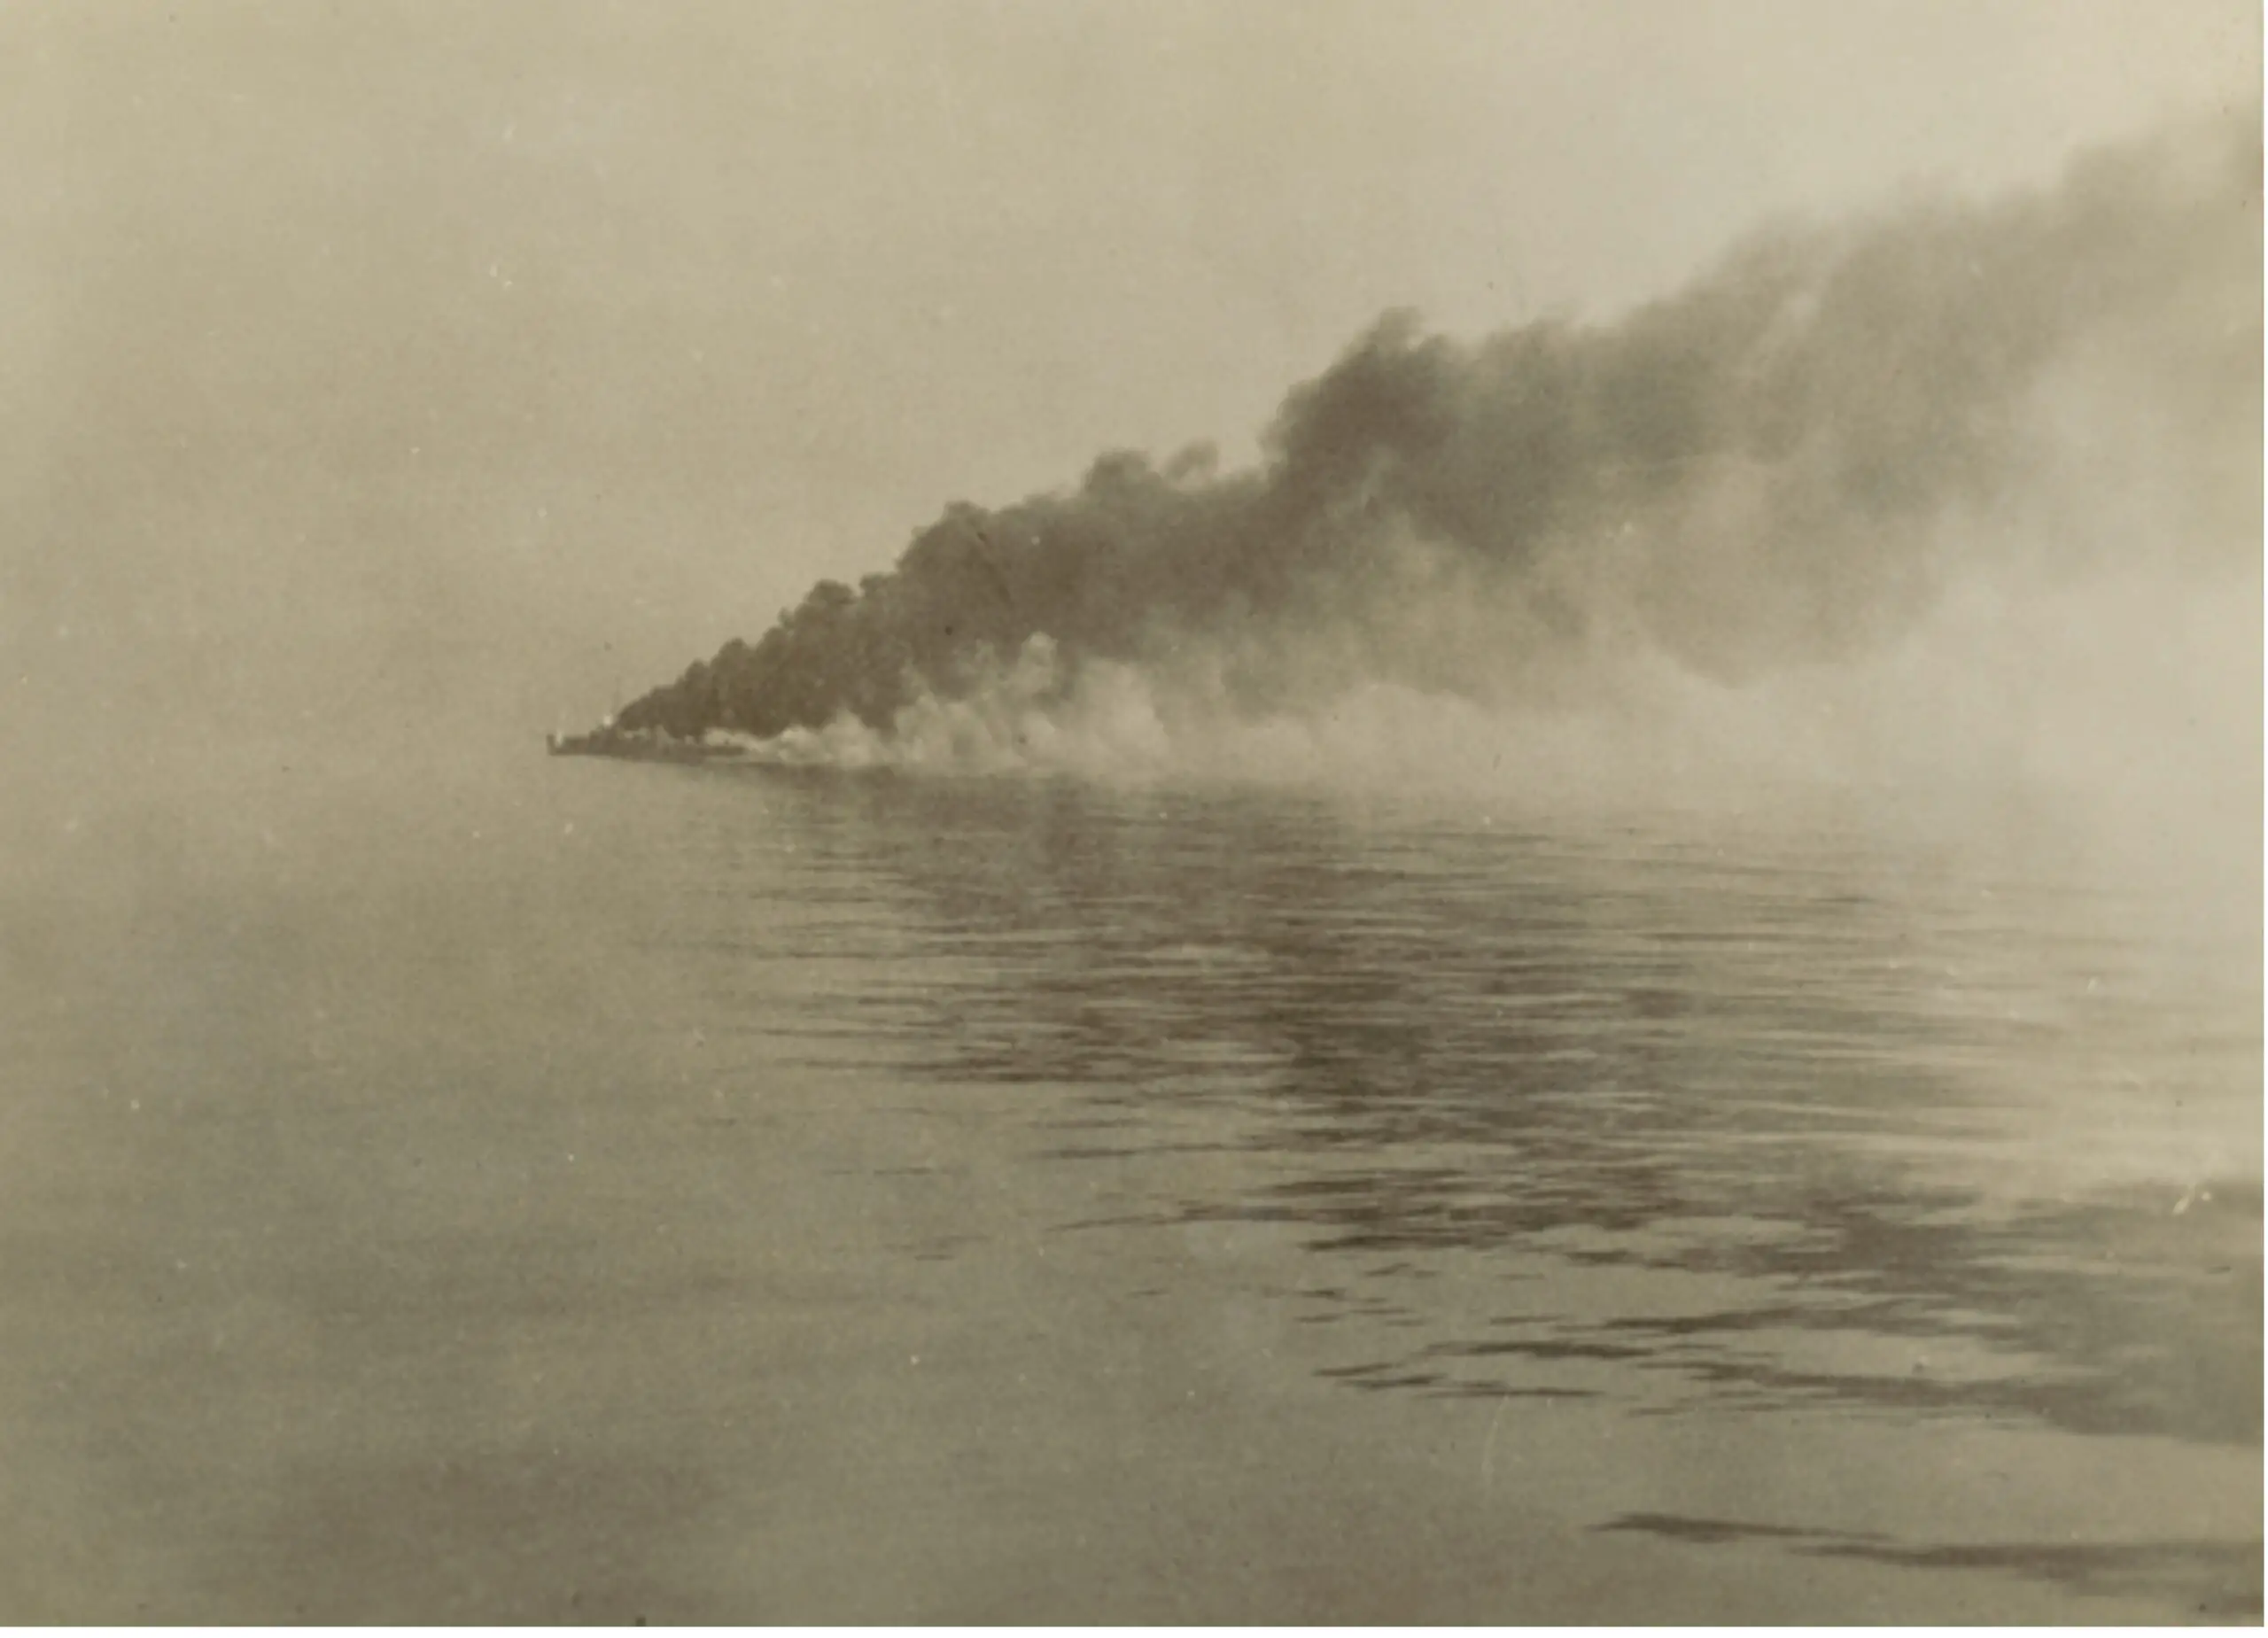 Figure 1 Espero making smoke, photo taken from HMAS Sydney (Australian War Memorial)